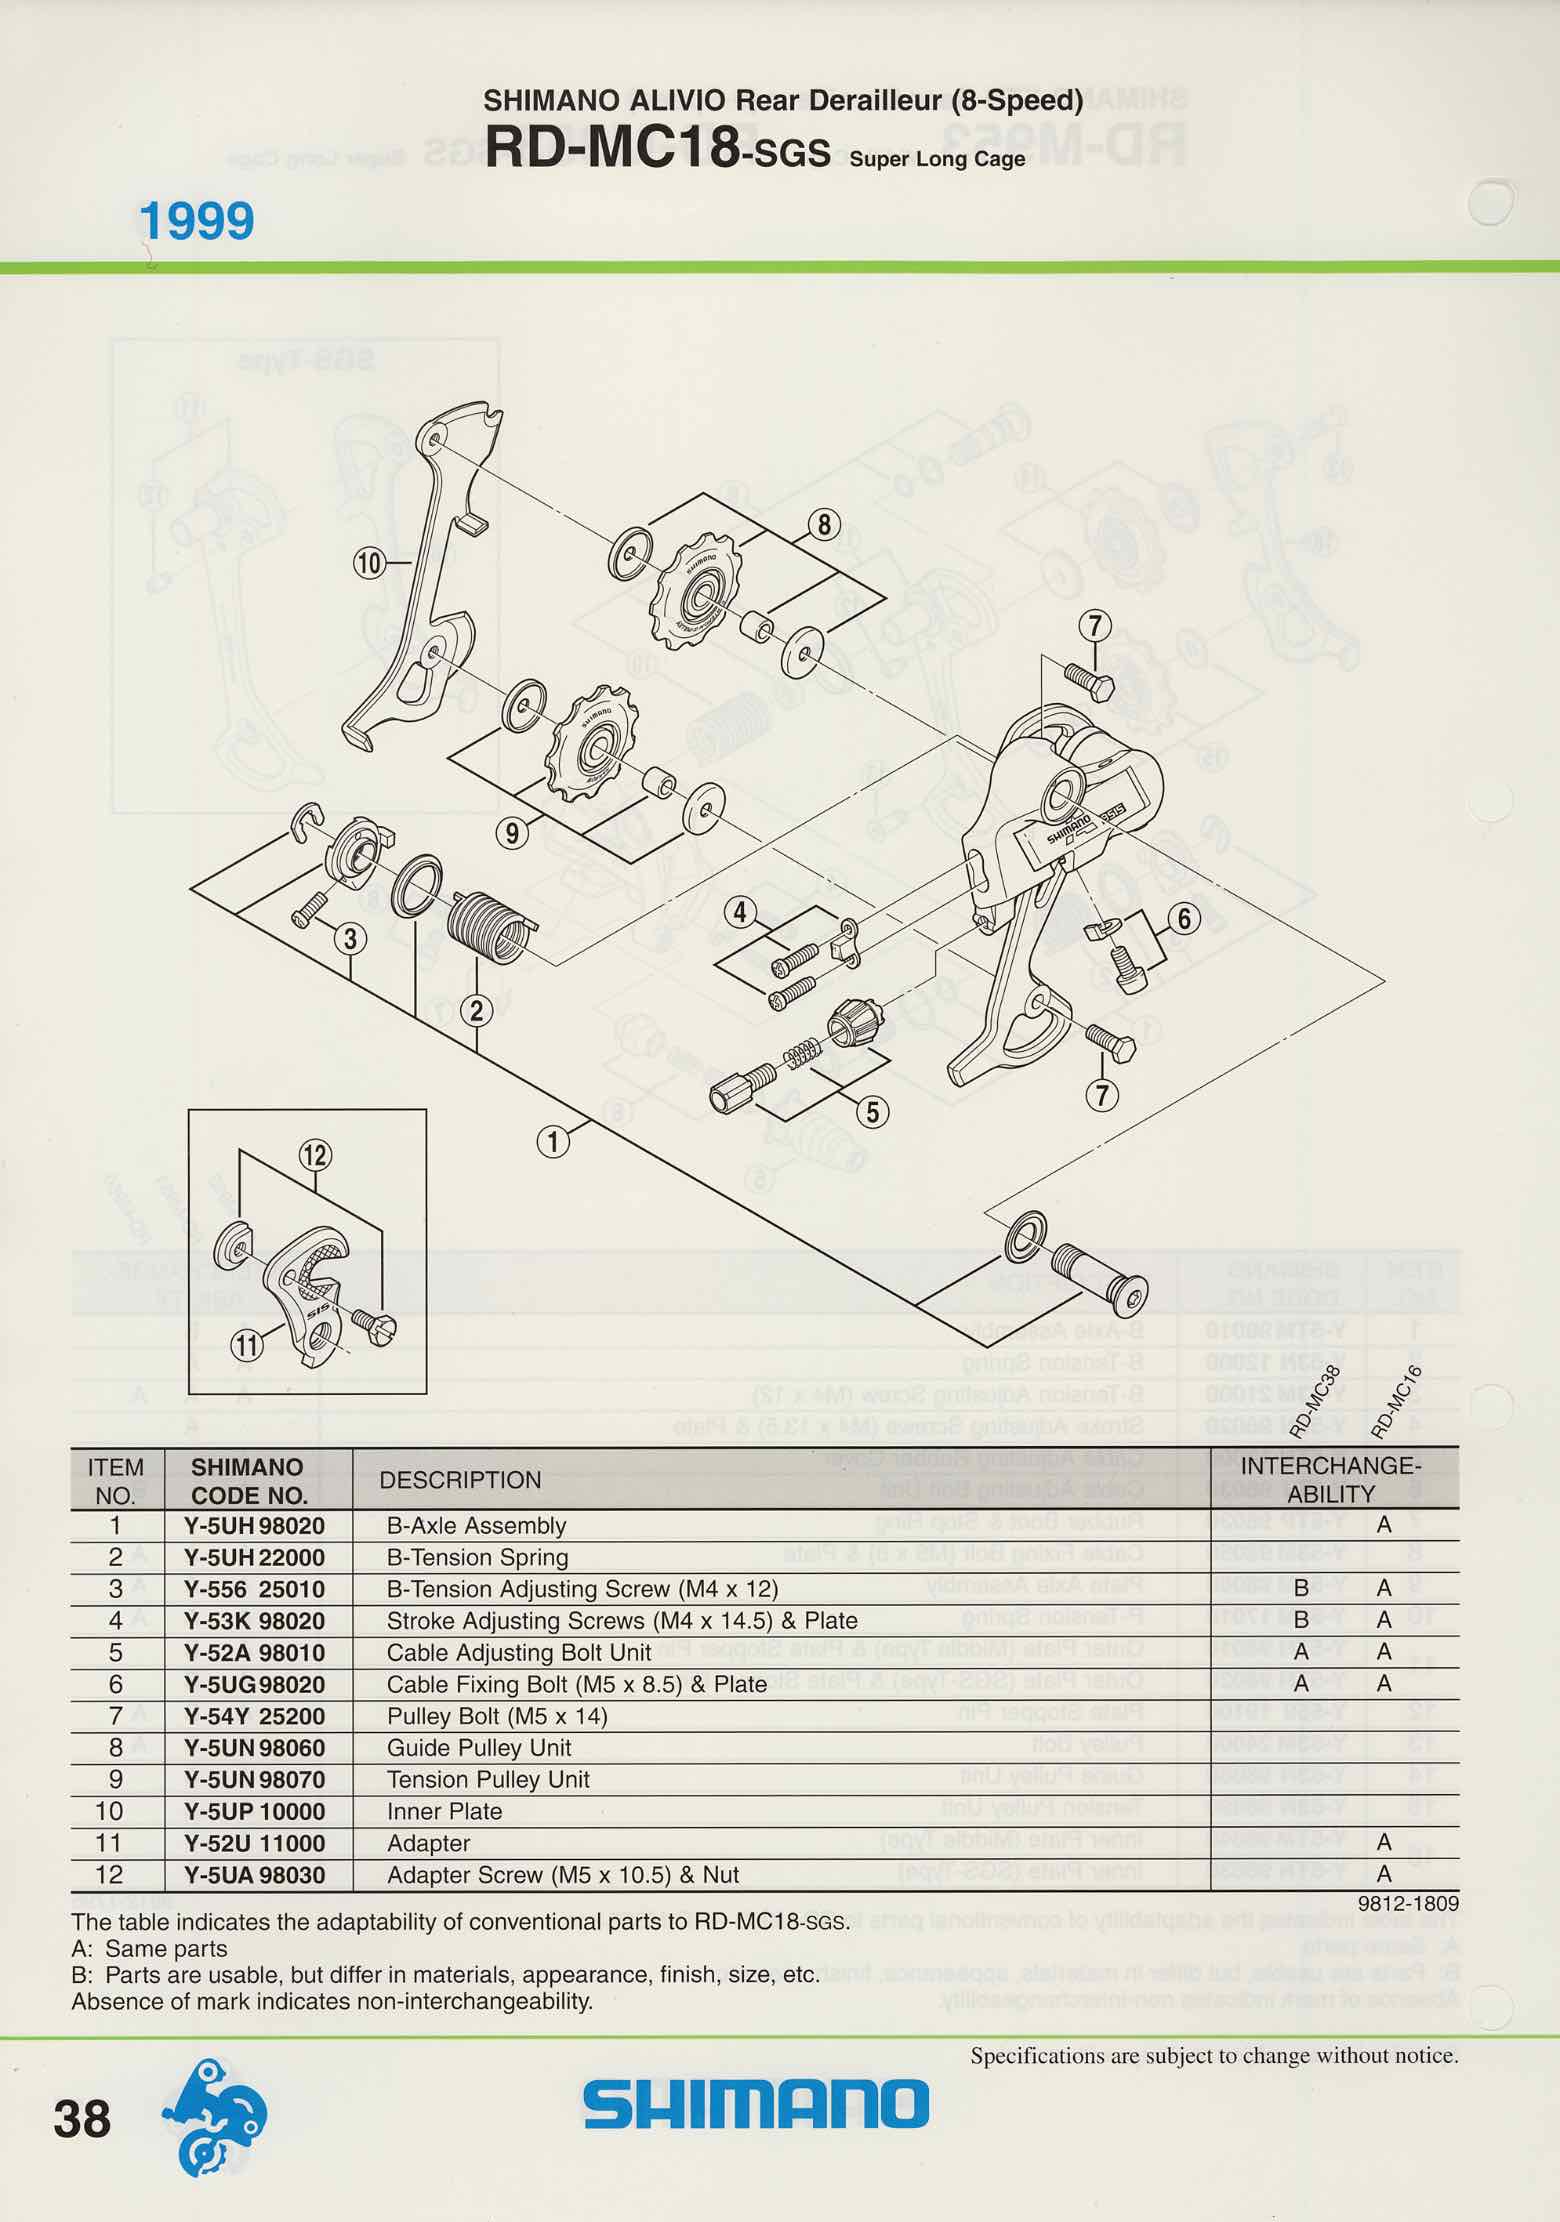 Shimano Spare Parts Catalogue - 1994 to 2004 s5 p38 main image